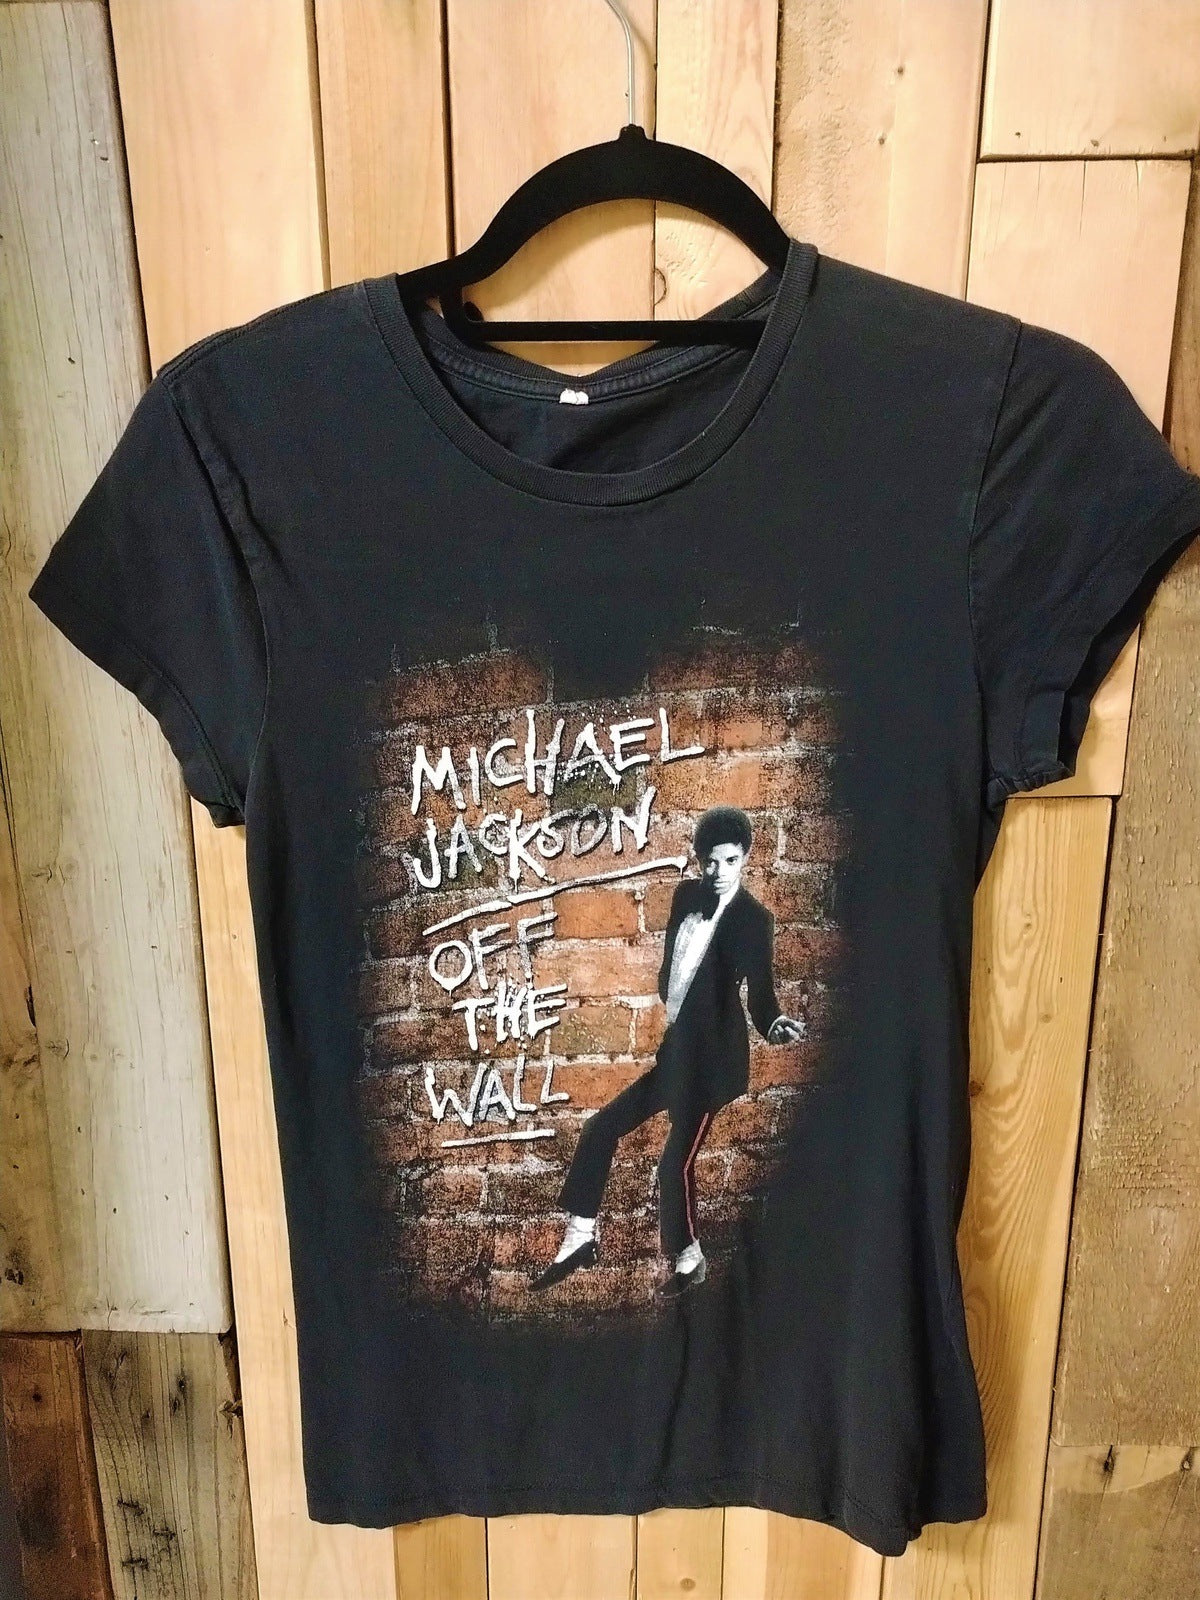 Michael Jackson "Off The Wall" Women's T Shirt Size XS